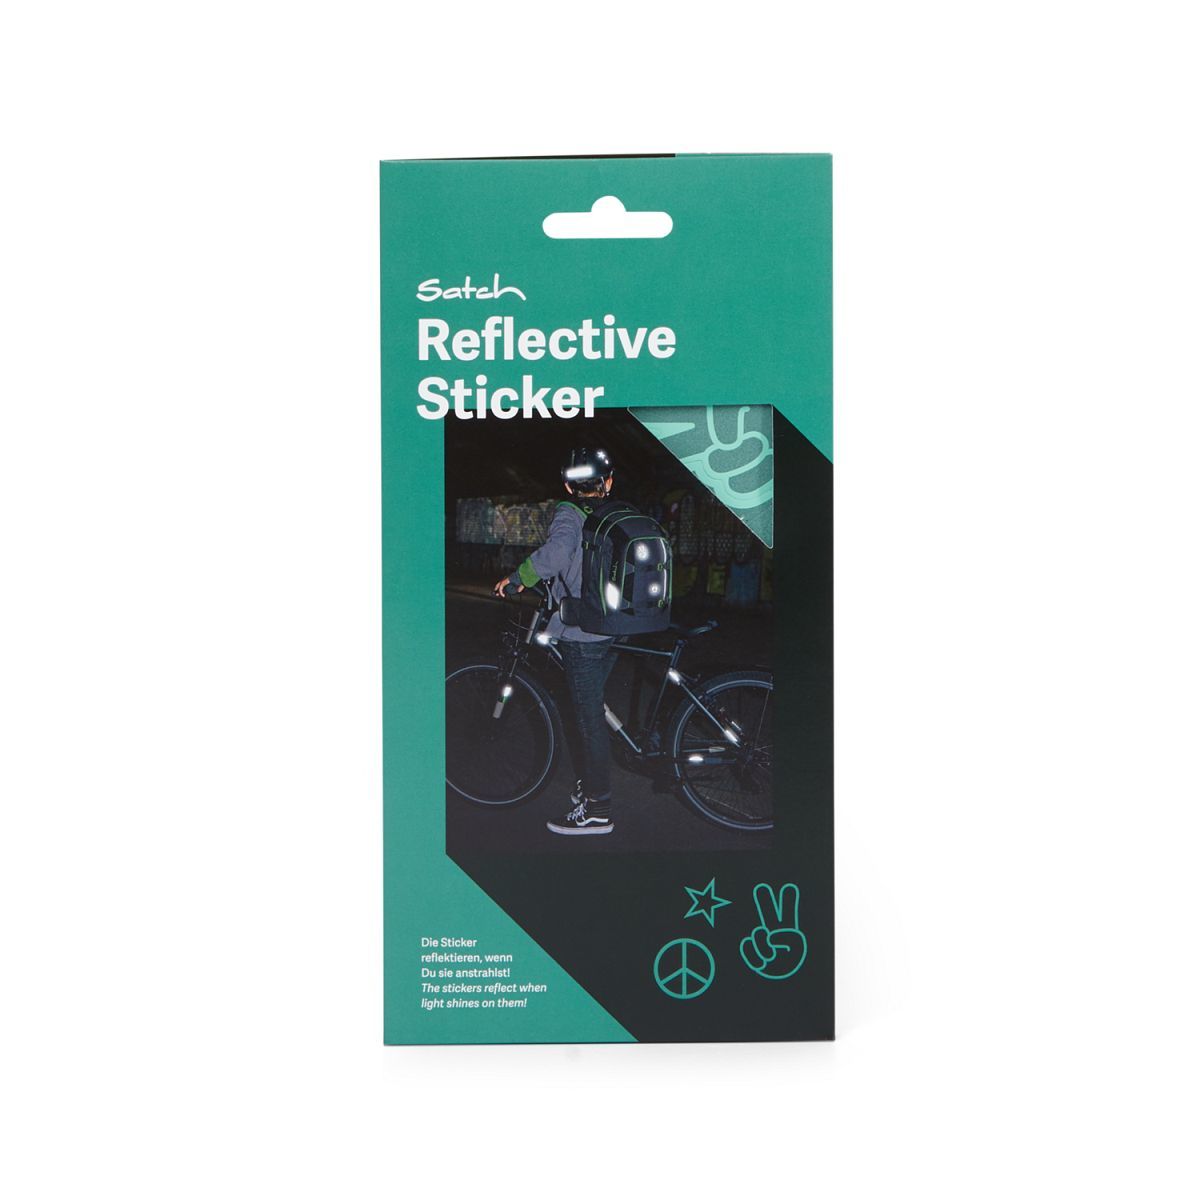 Satch Reflective Sticker mint Frontansicht Verpackung 